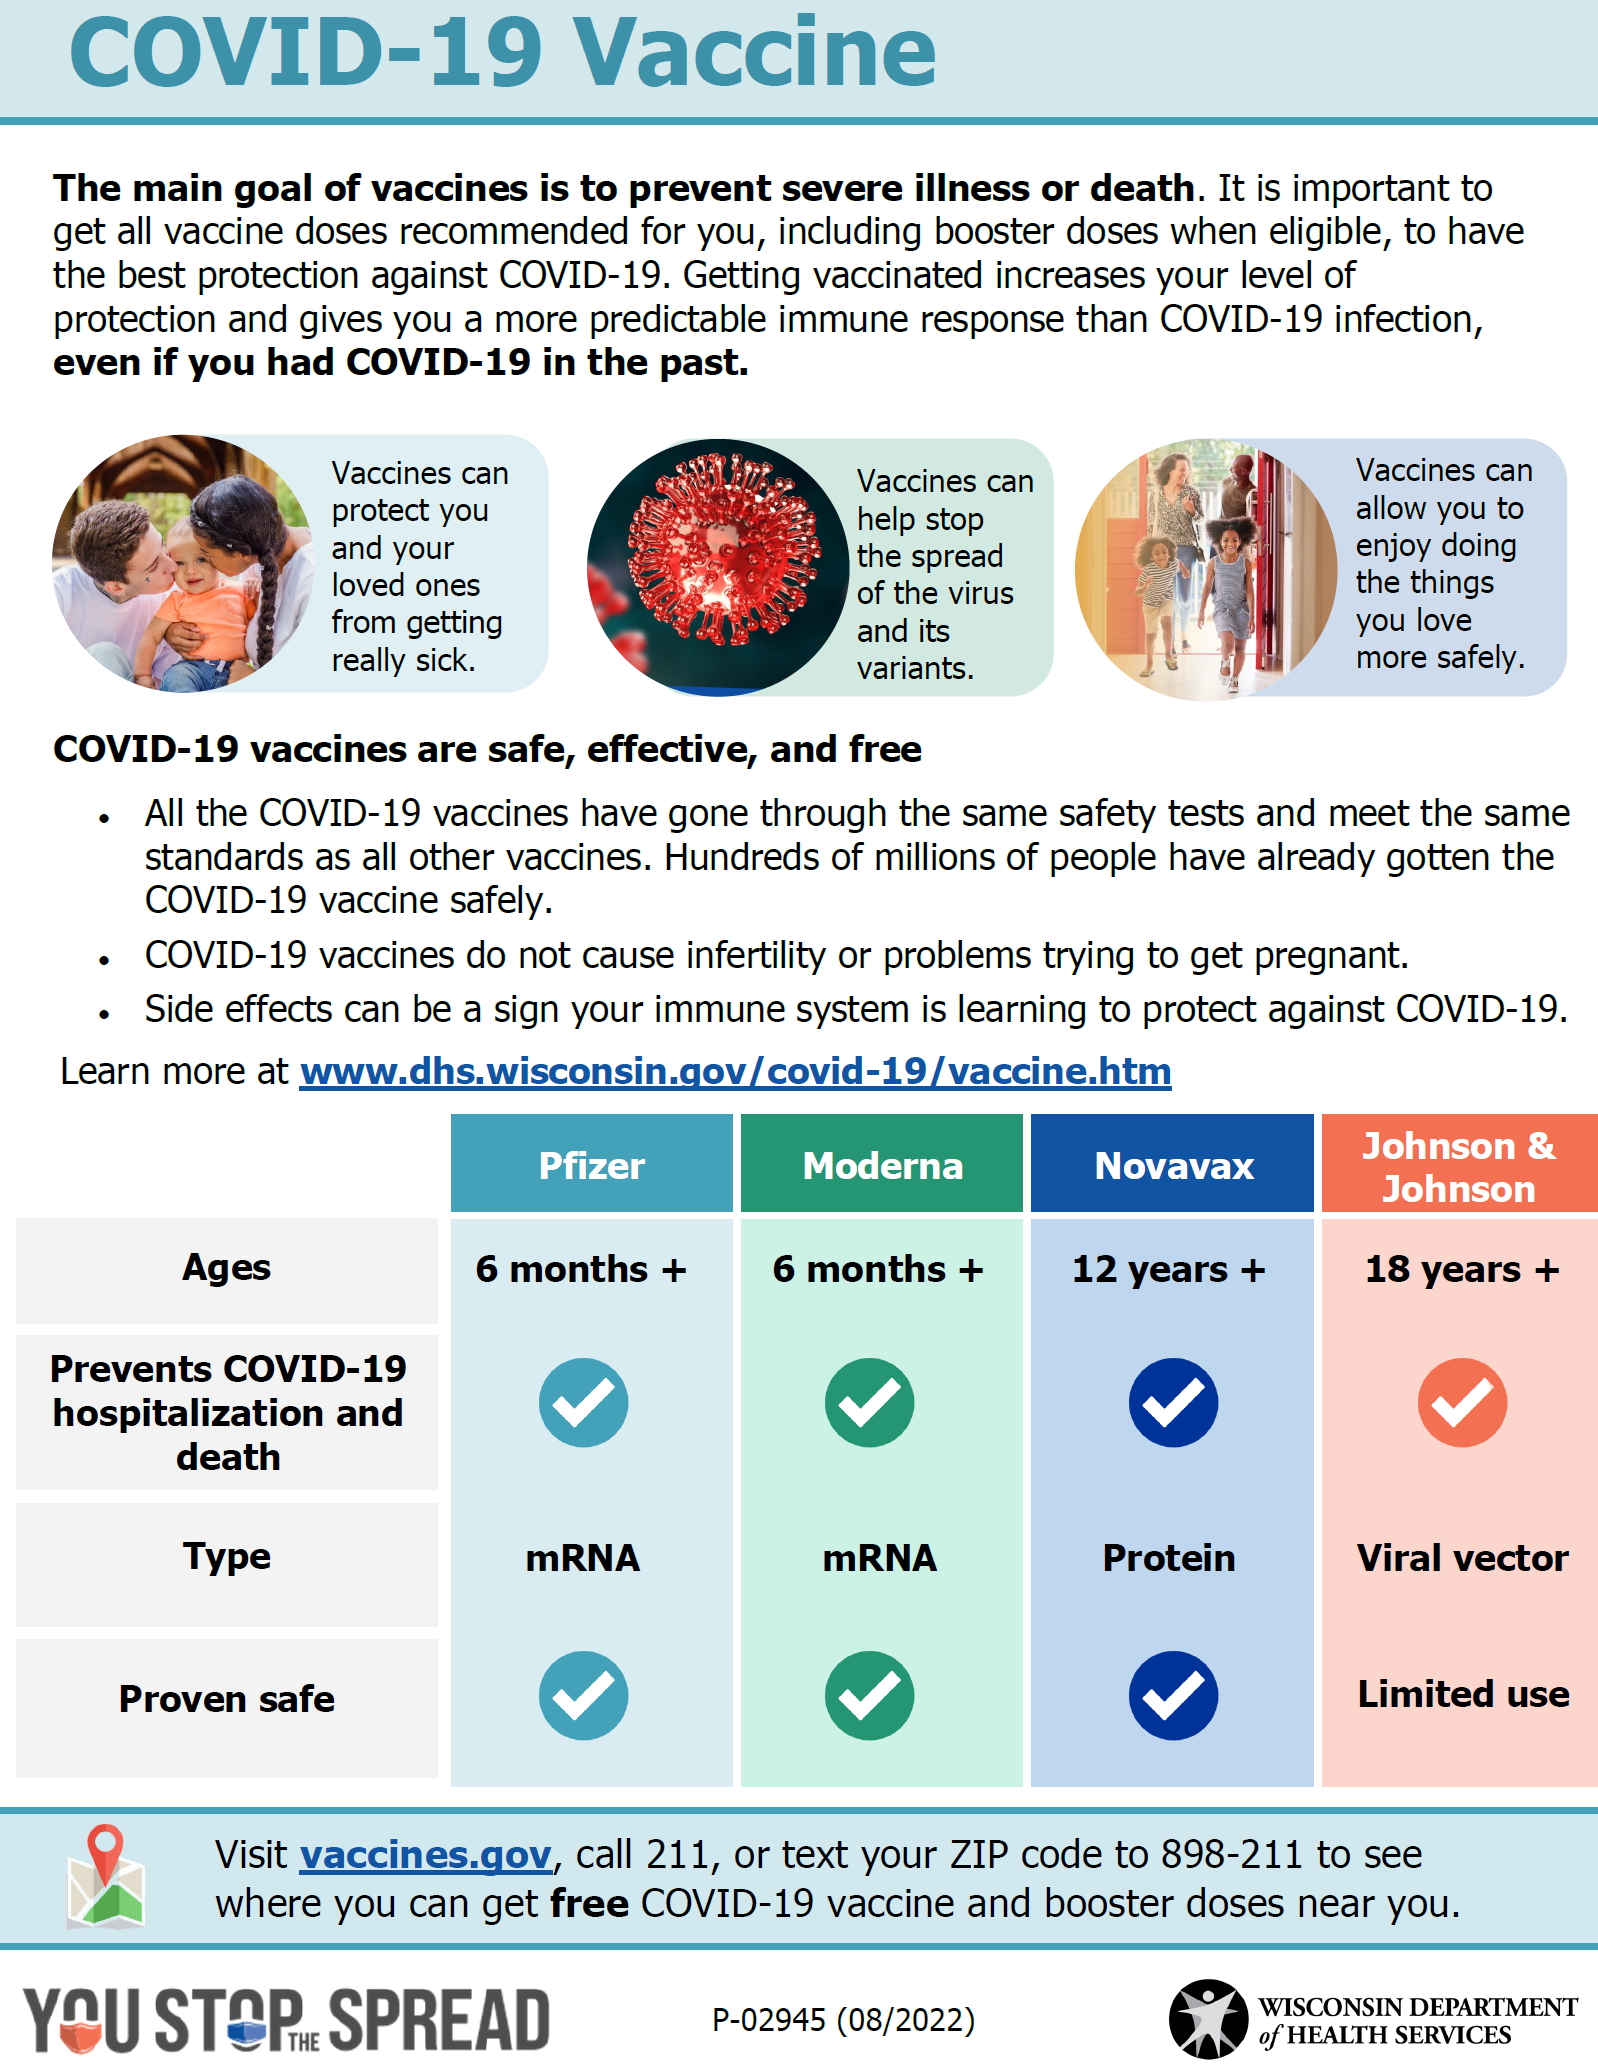 COVID-19 vaccine info sheet